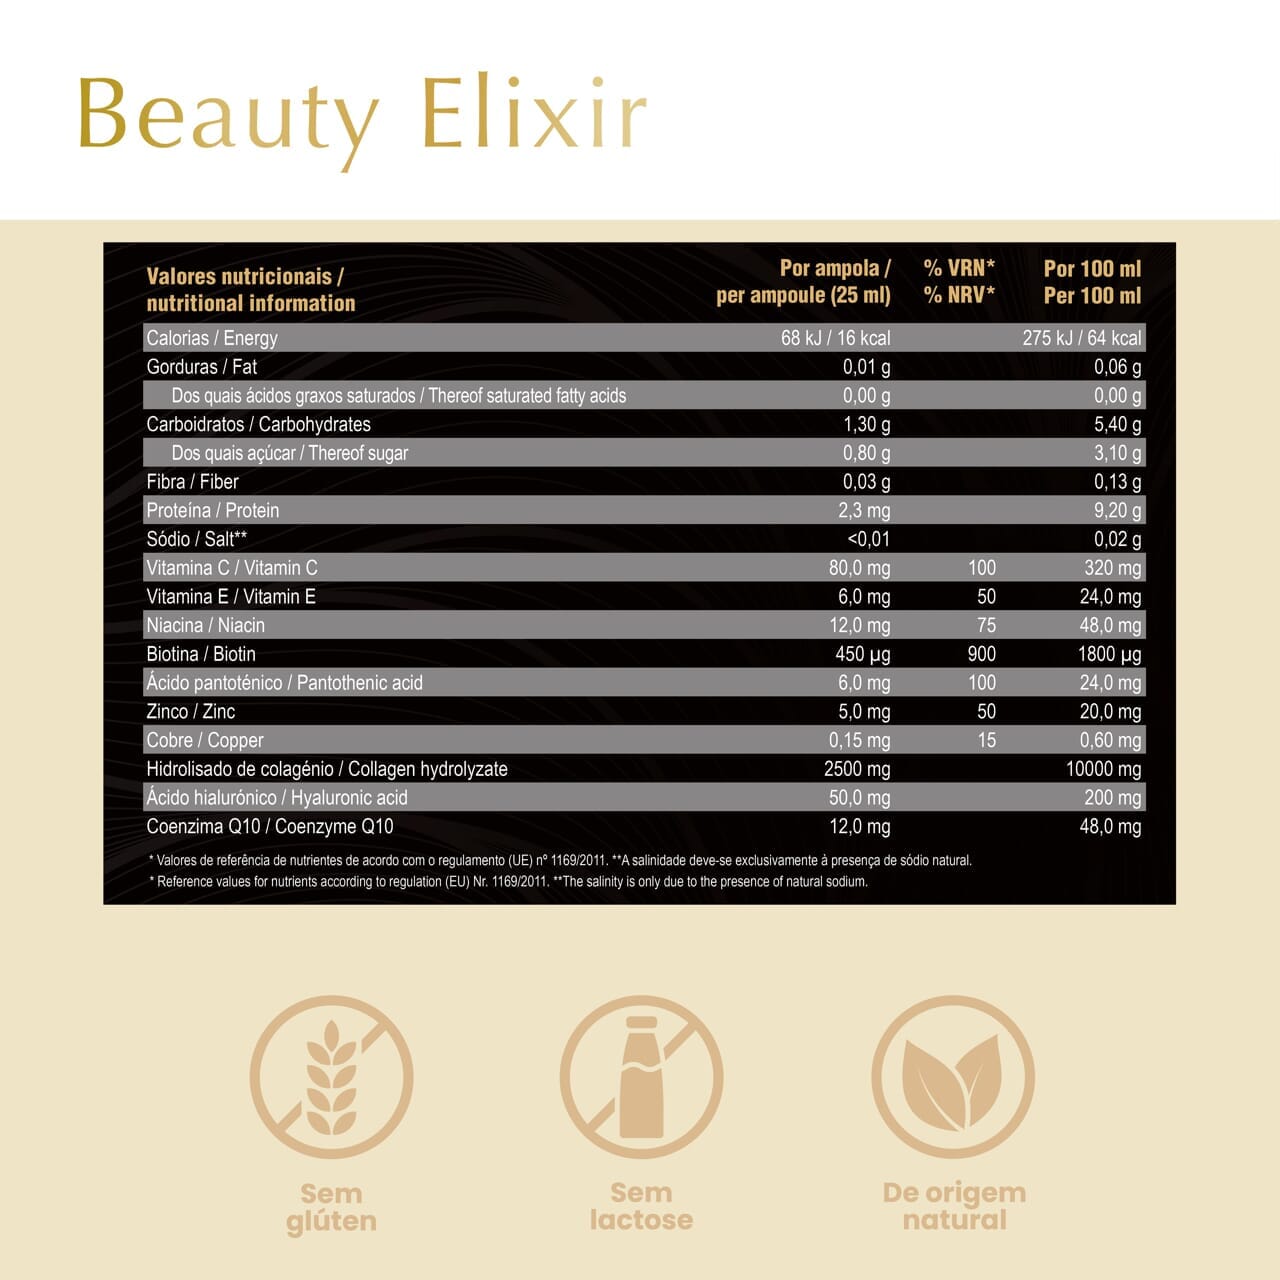 SanaExpert Collagen Beauty Elixir